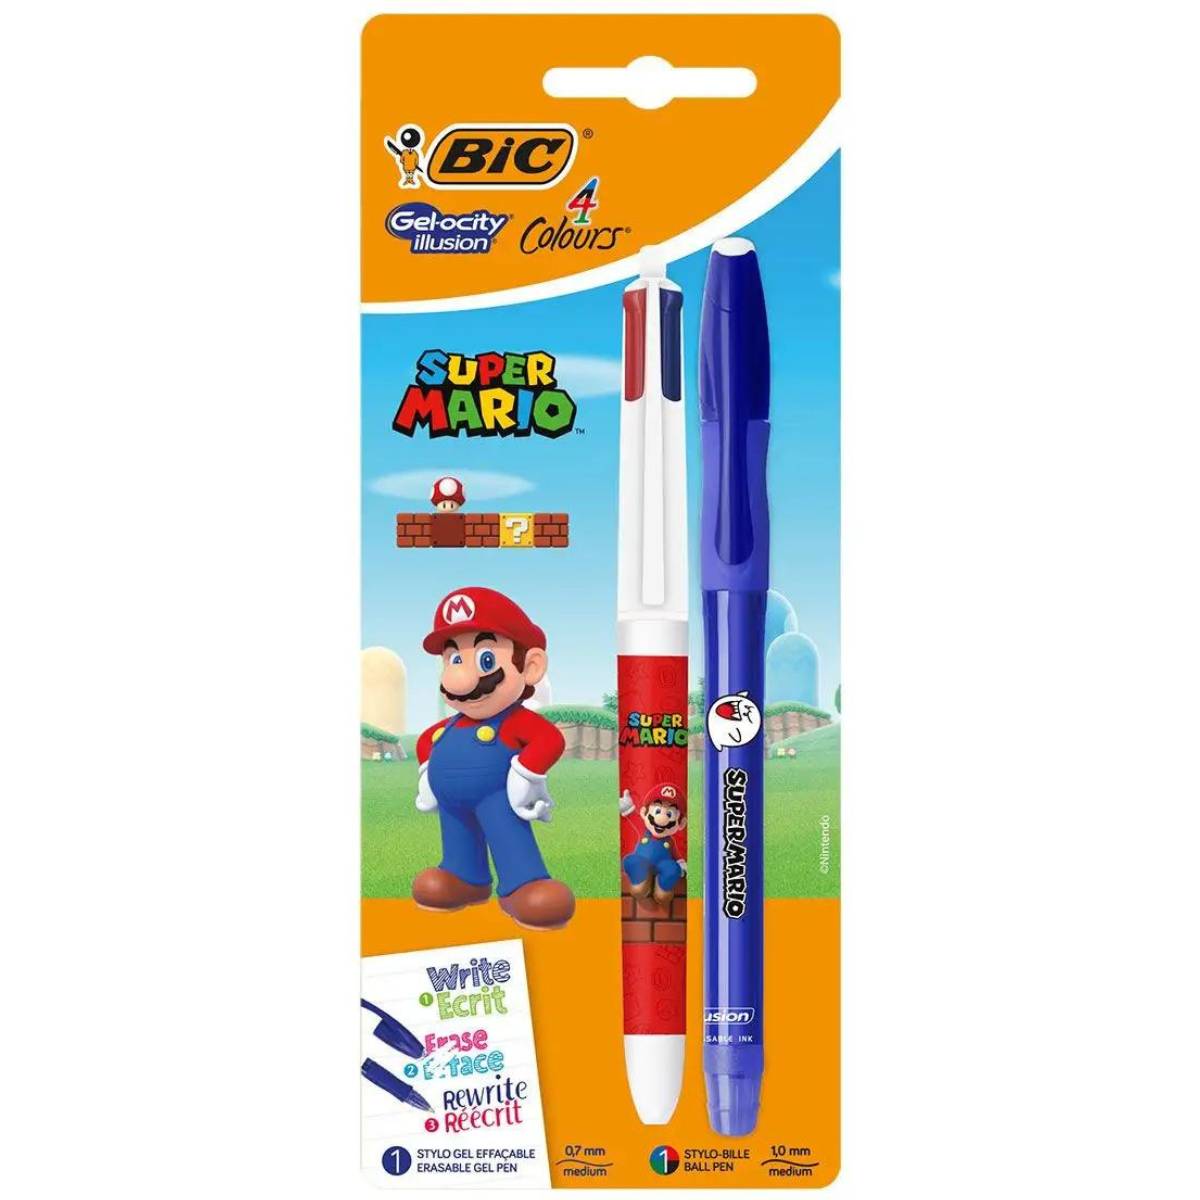 Penna a 4 colori e penna Gel-ocity blu cancellabile Super Mario BIC